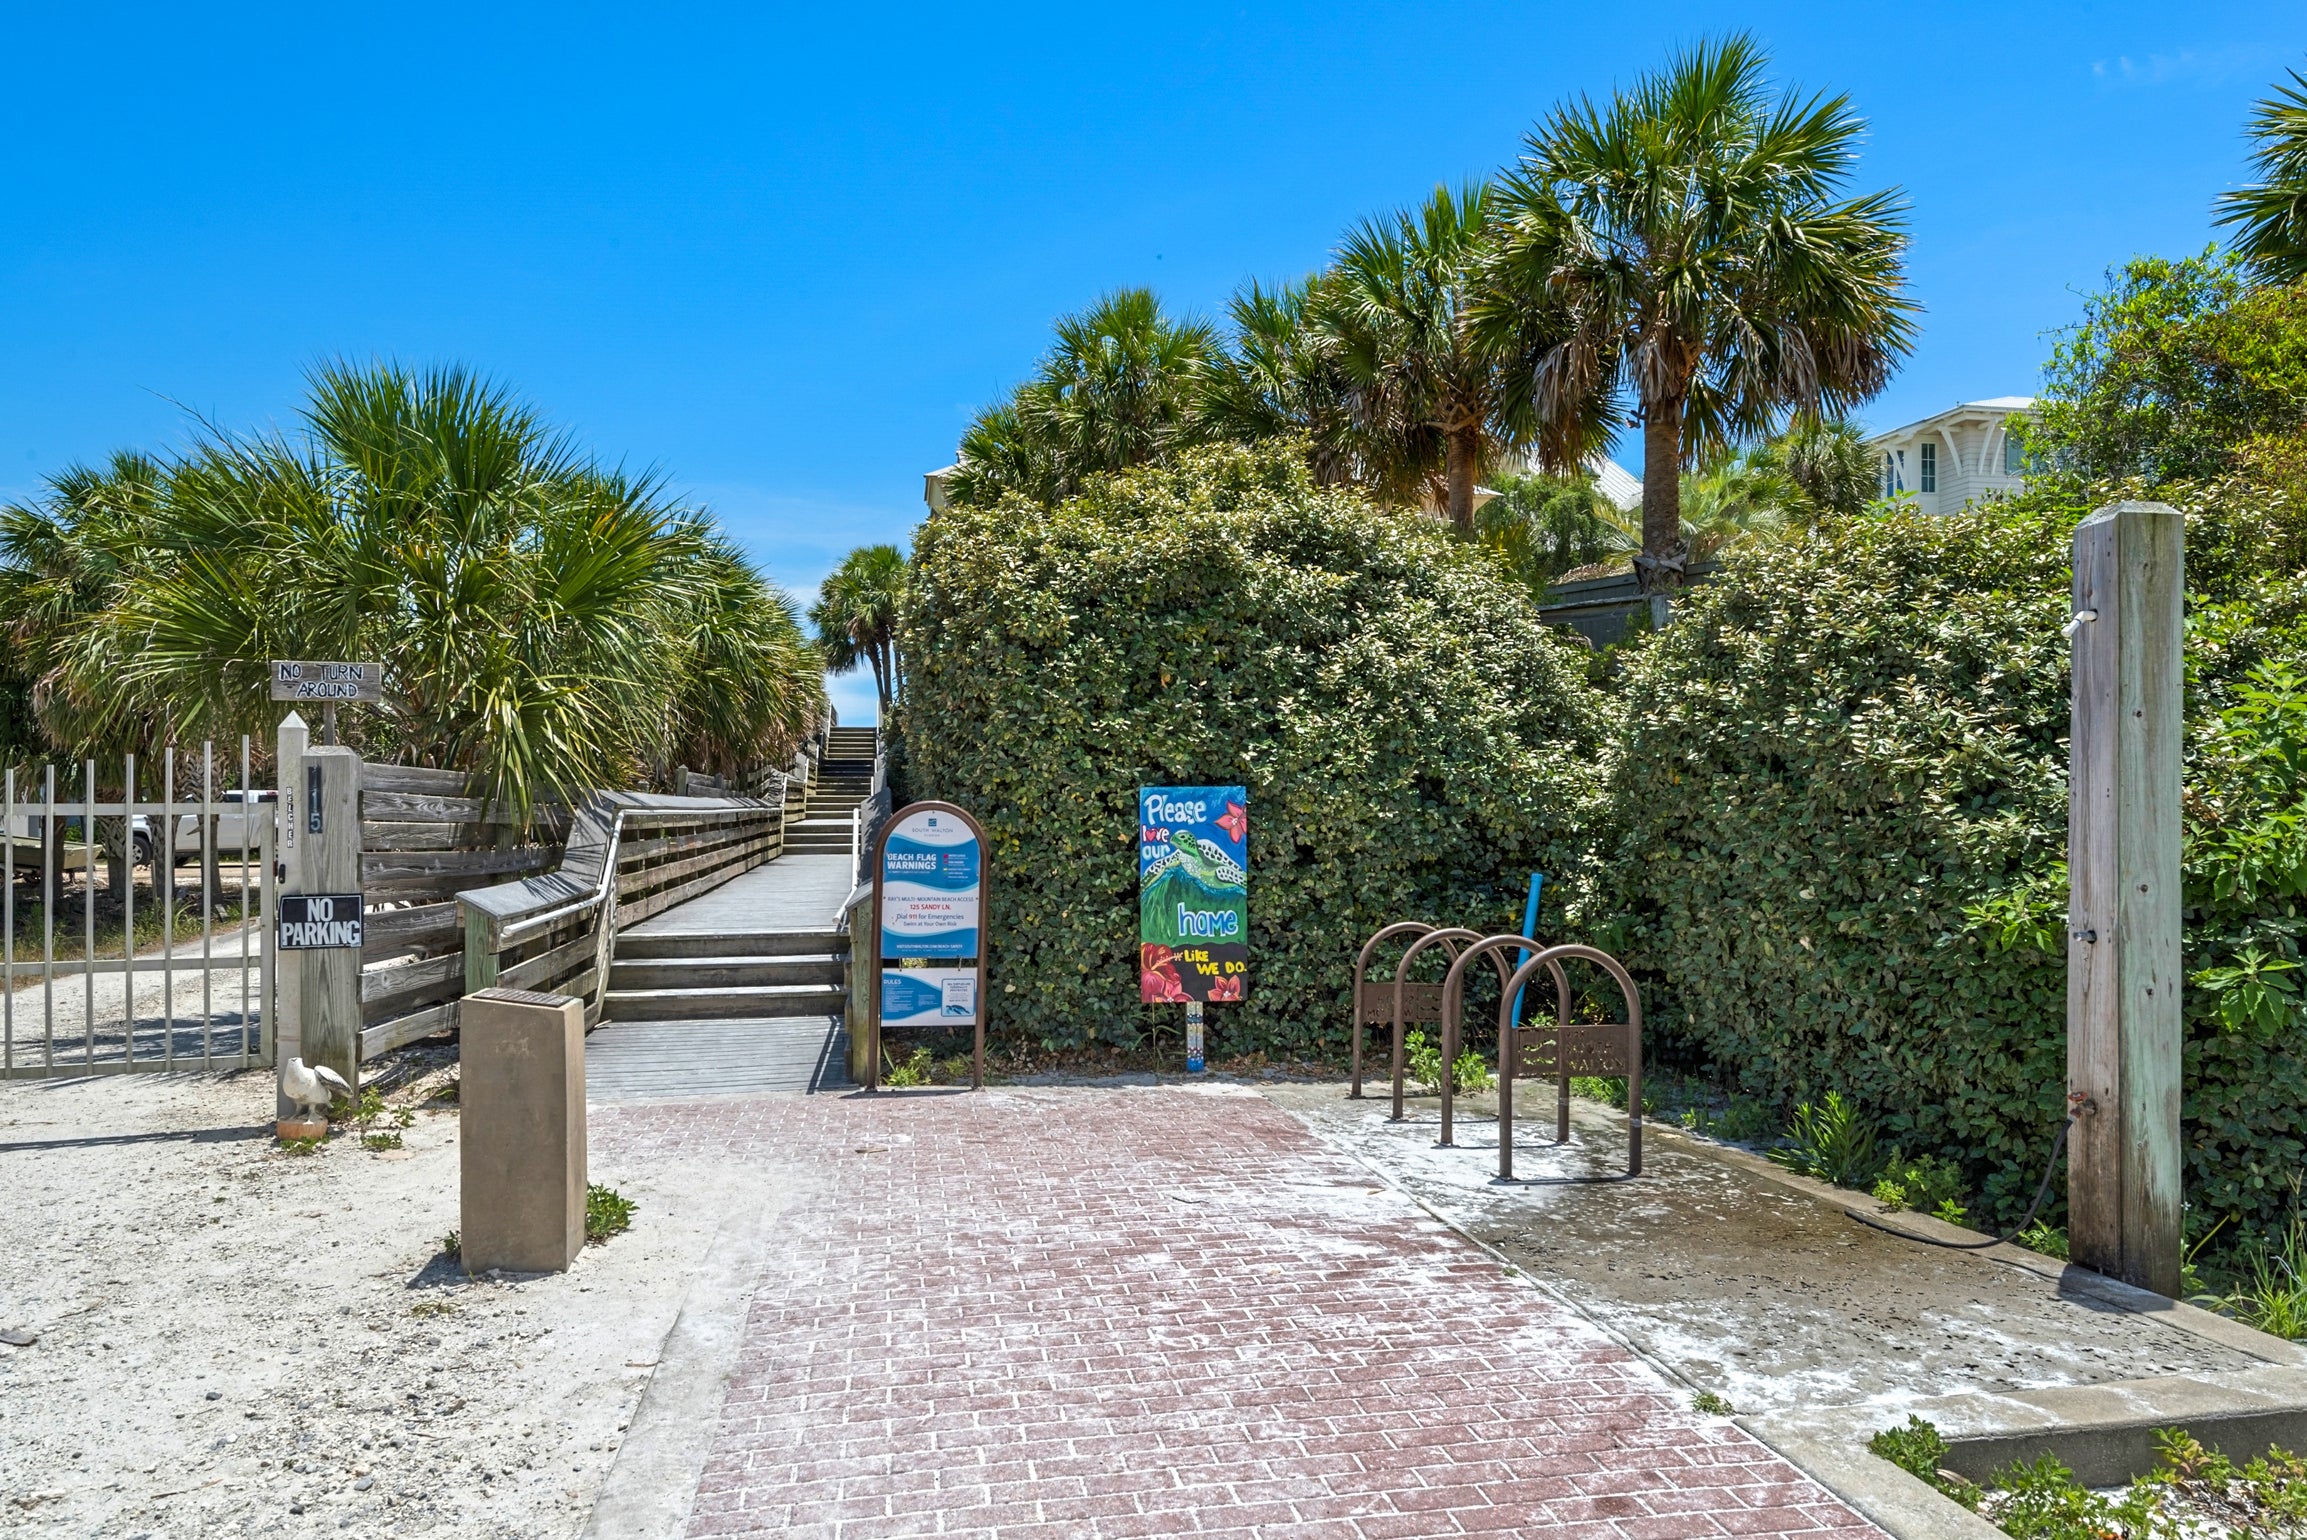 Rinsing Station and Bike Racks at Beach Access